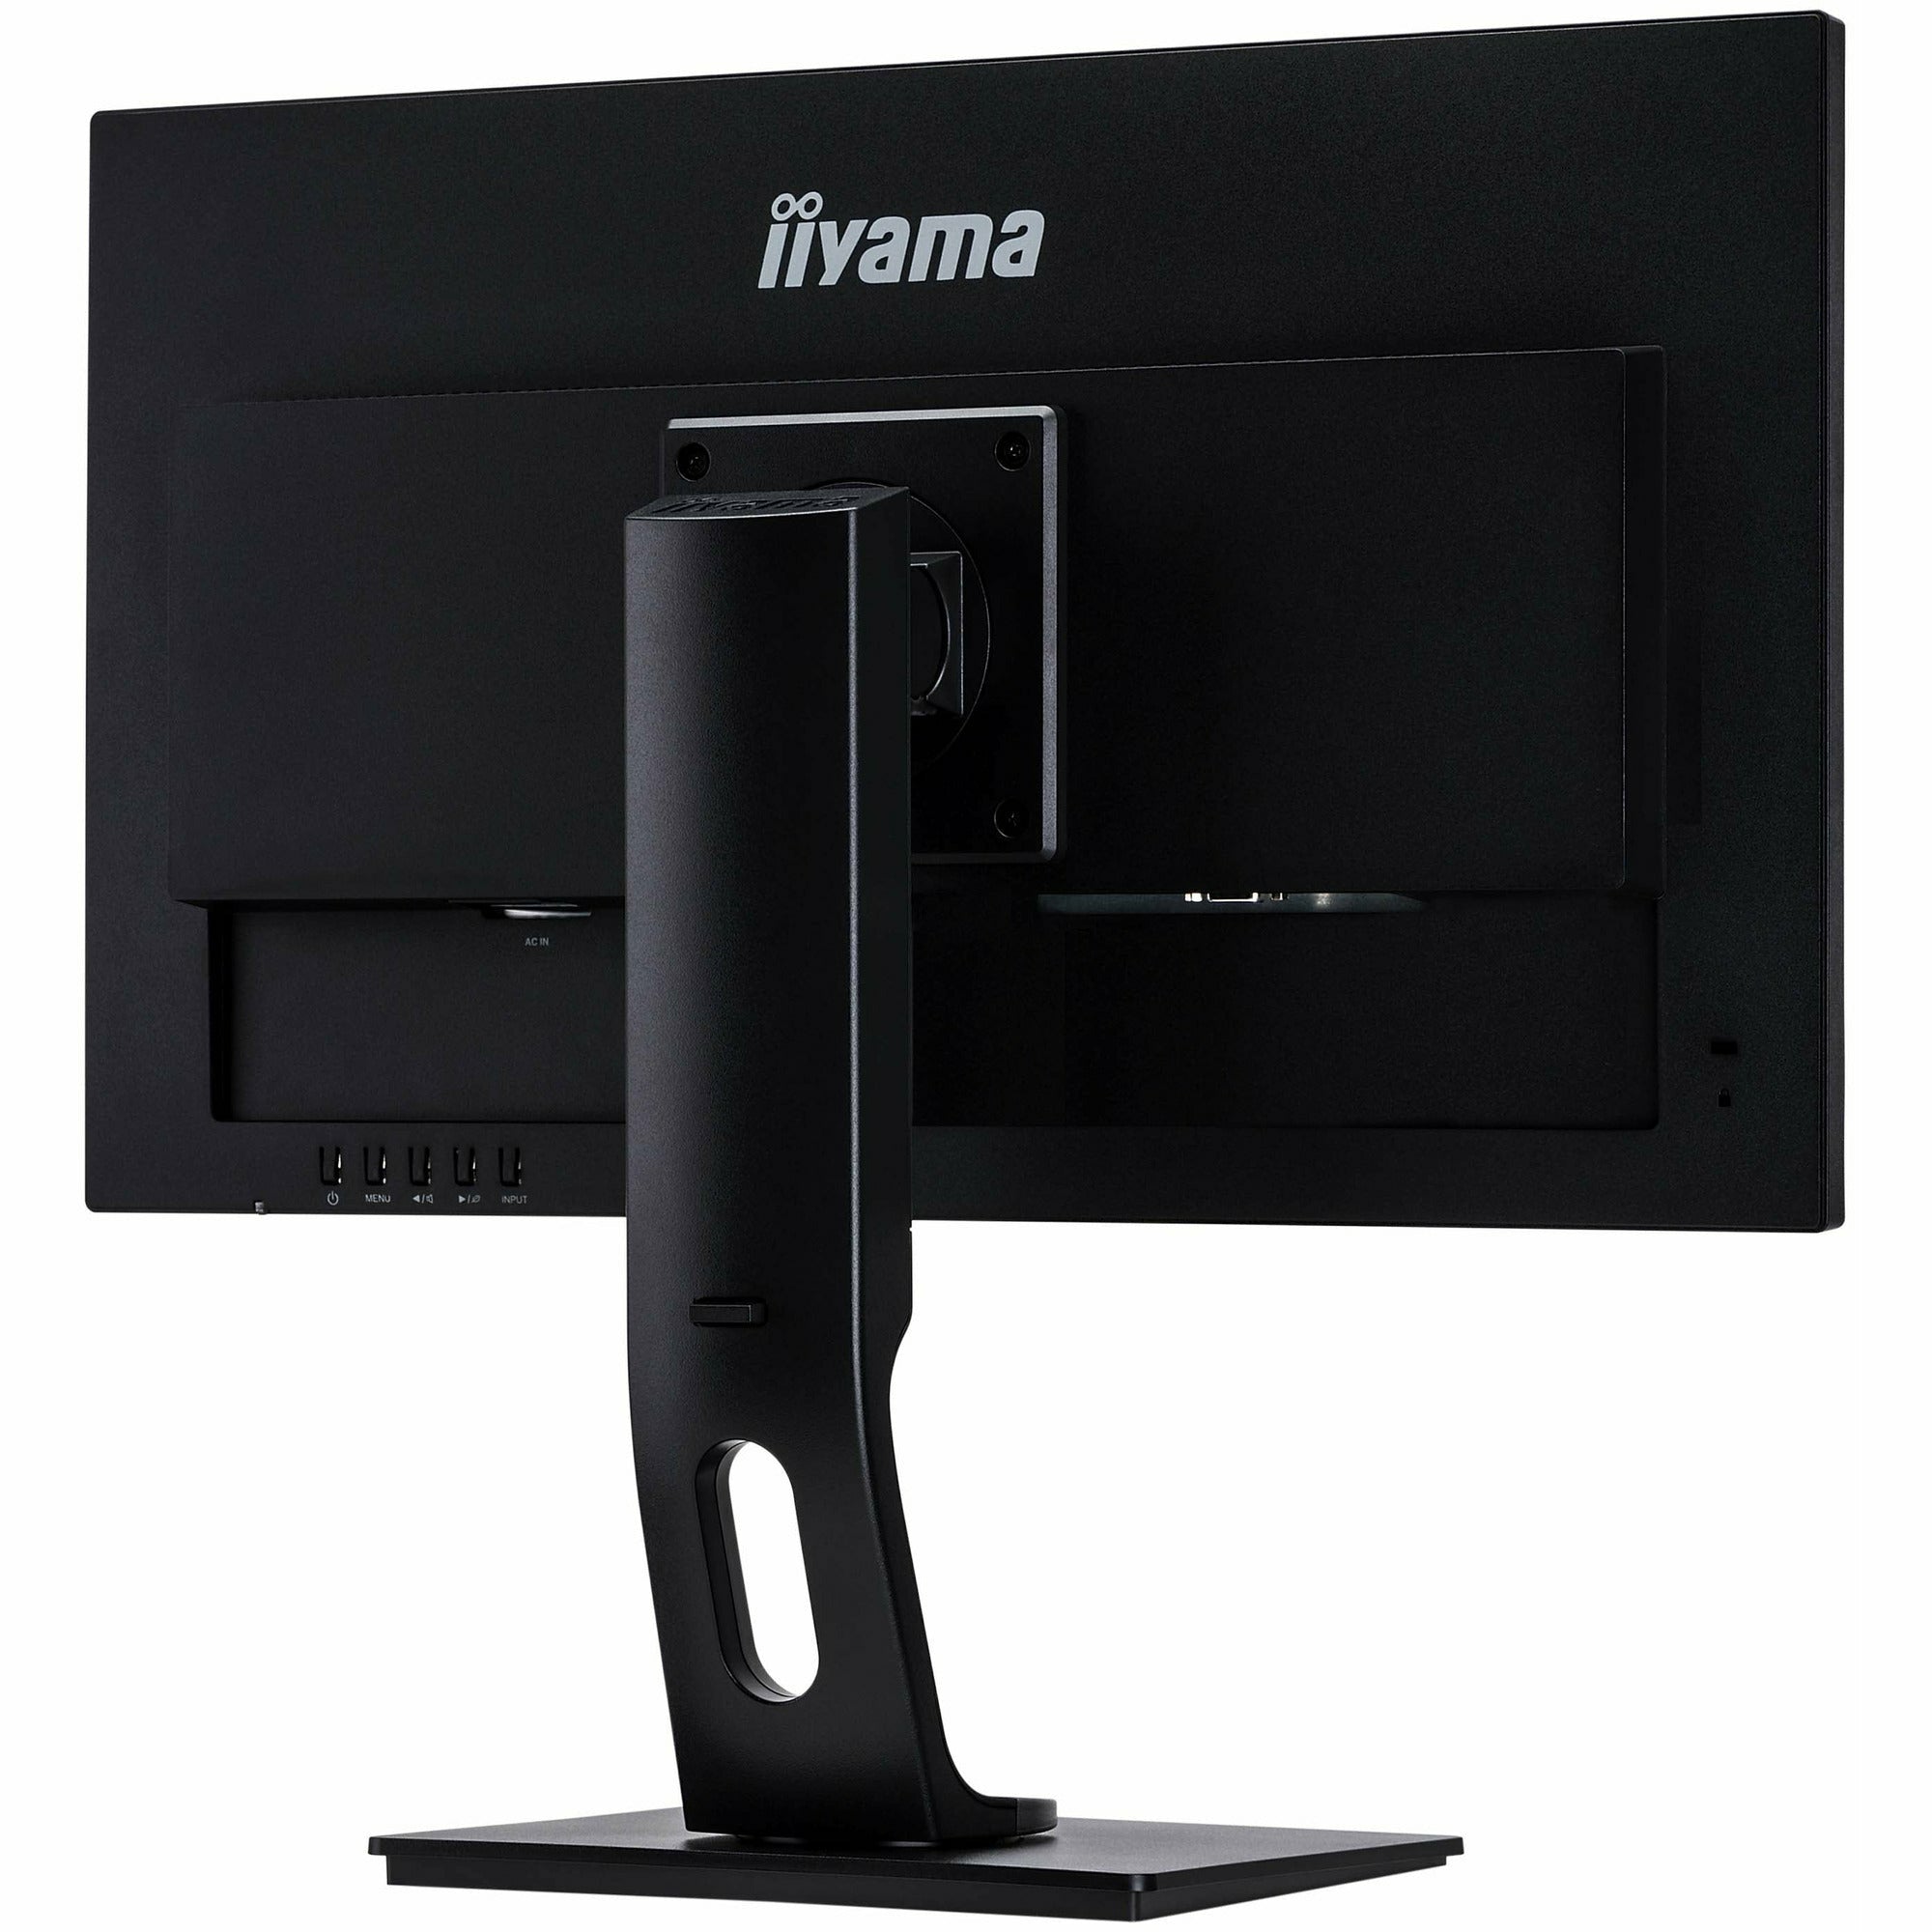 iiyama ProLite XB2474HS-B2 24" LCD Display